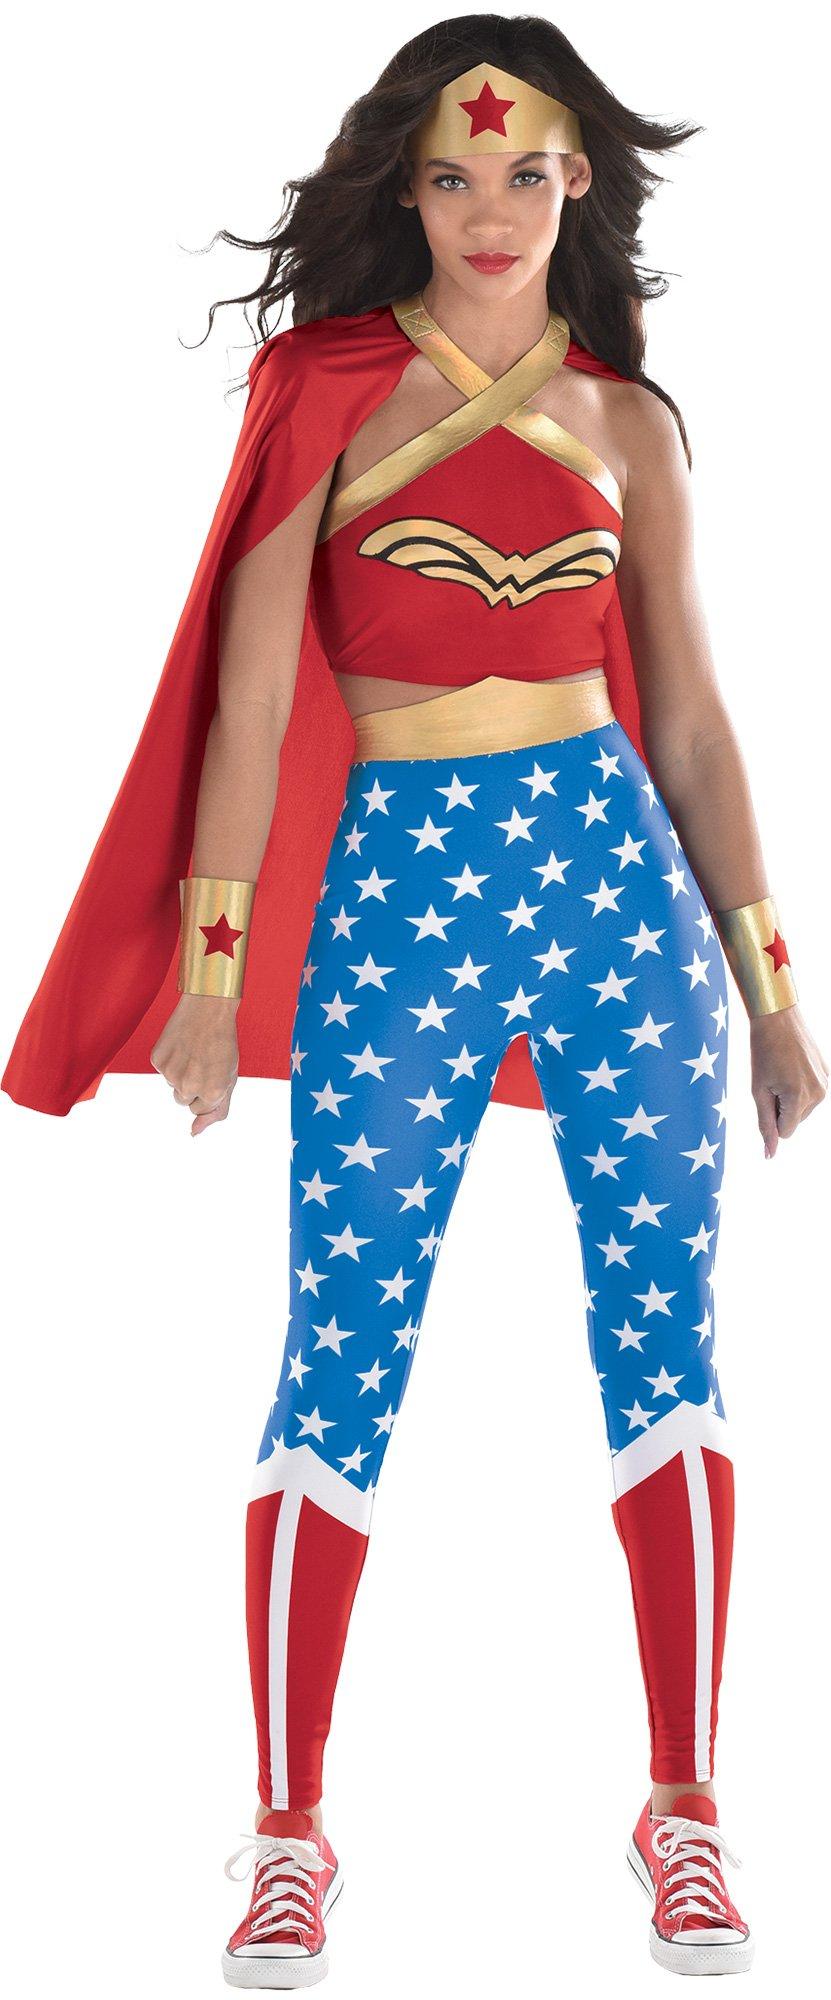 Wonder Woman Doggy & Me Costume - DC